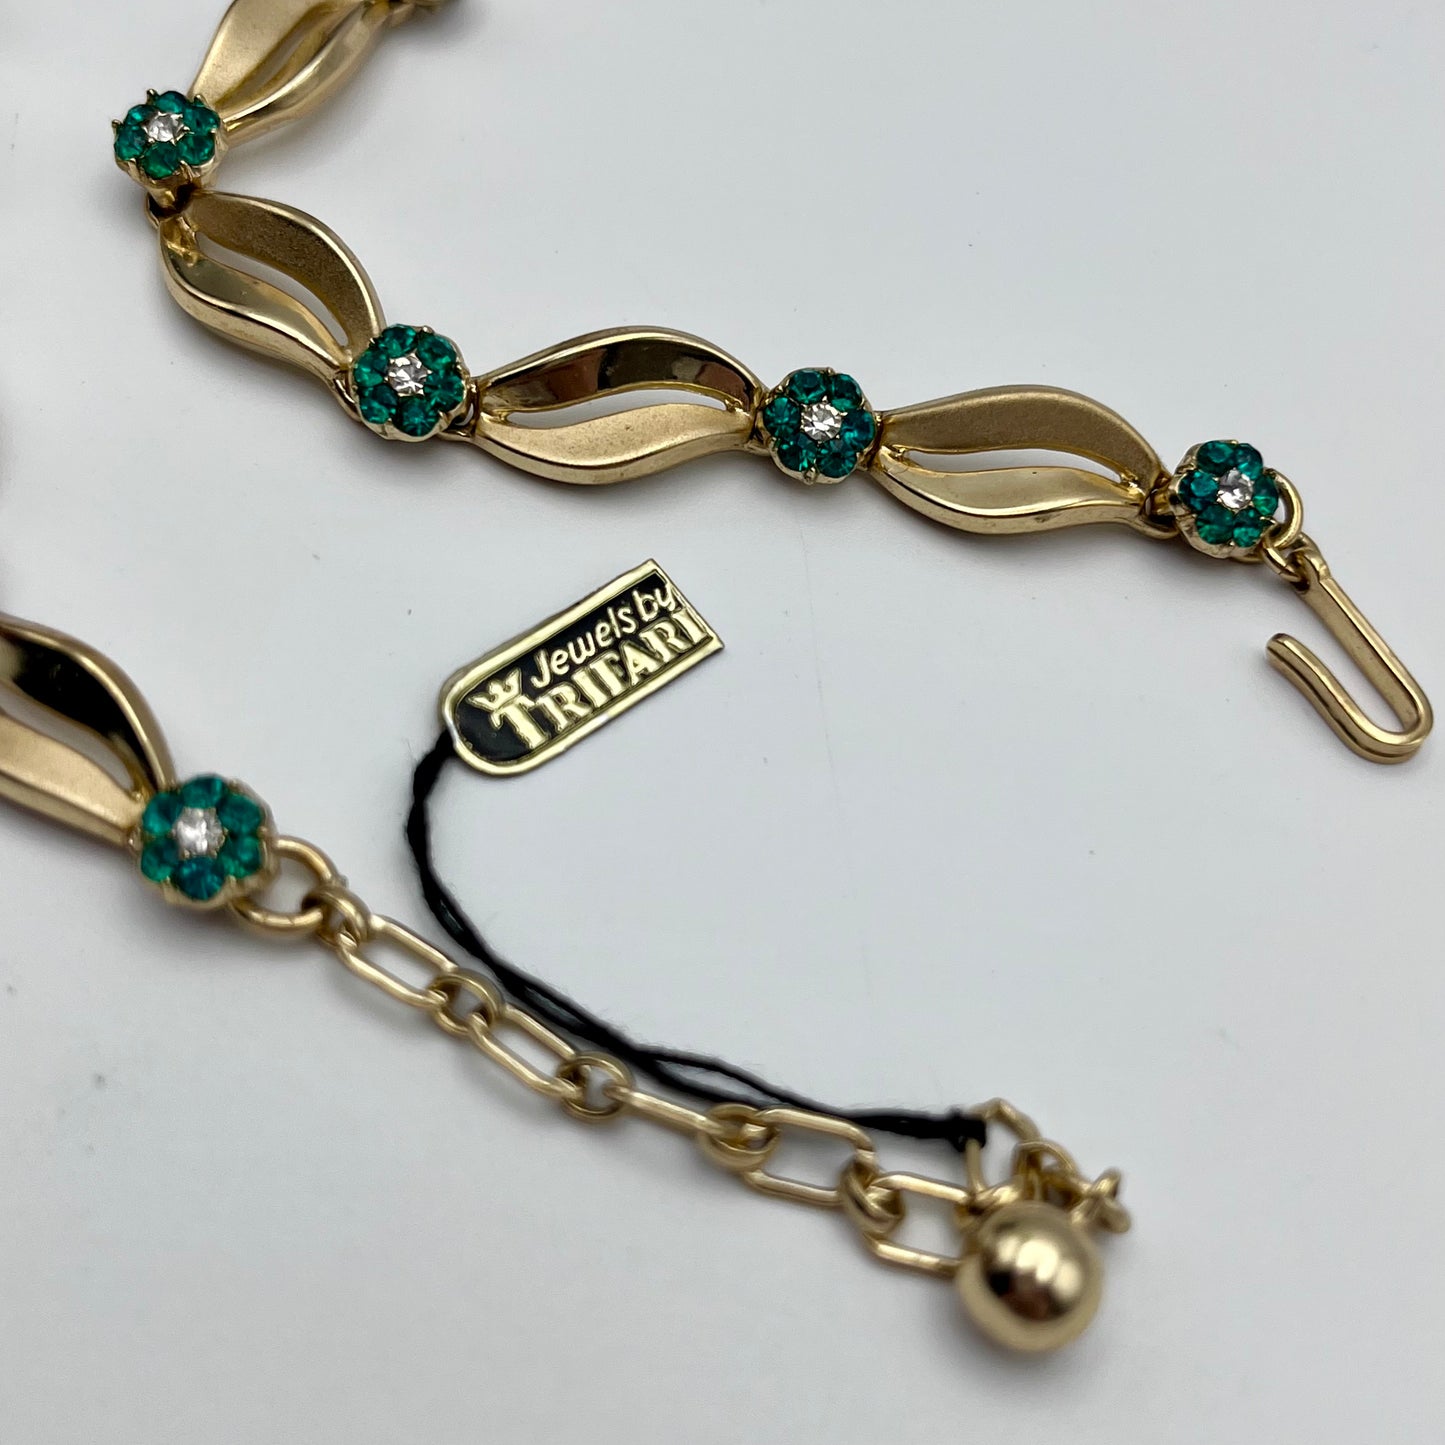 Early 1950s Trifari Rhinestone Necklace with Original Tag